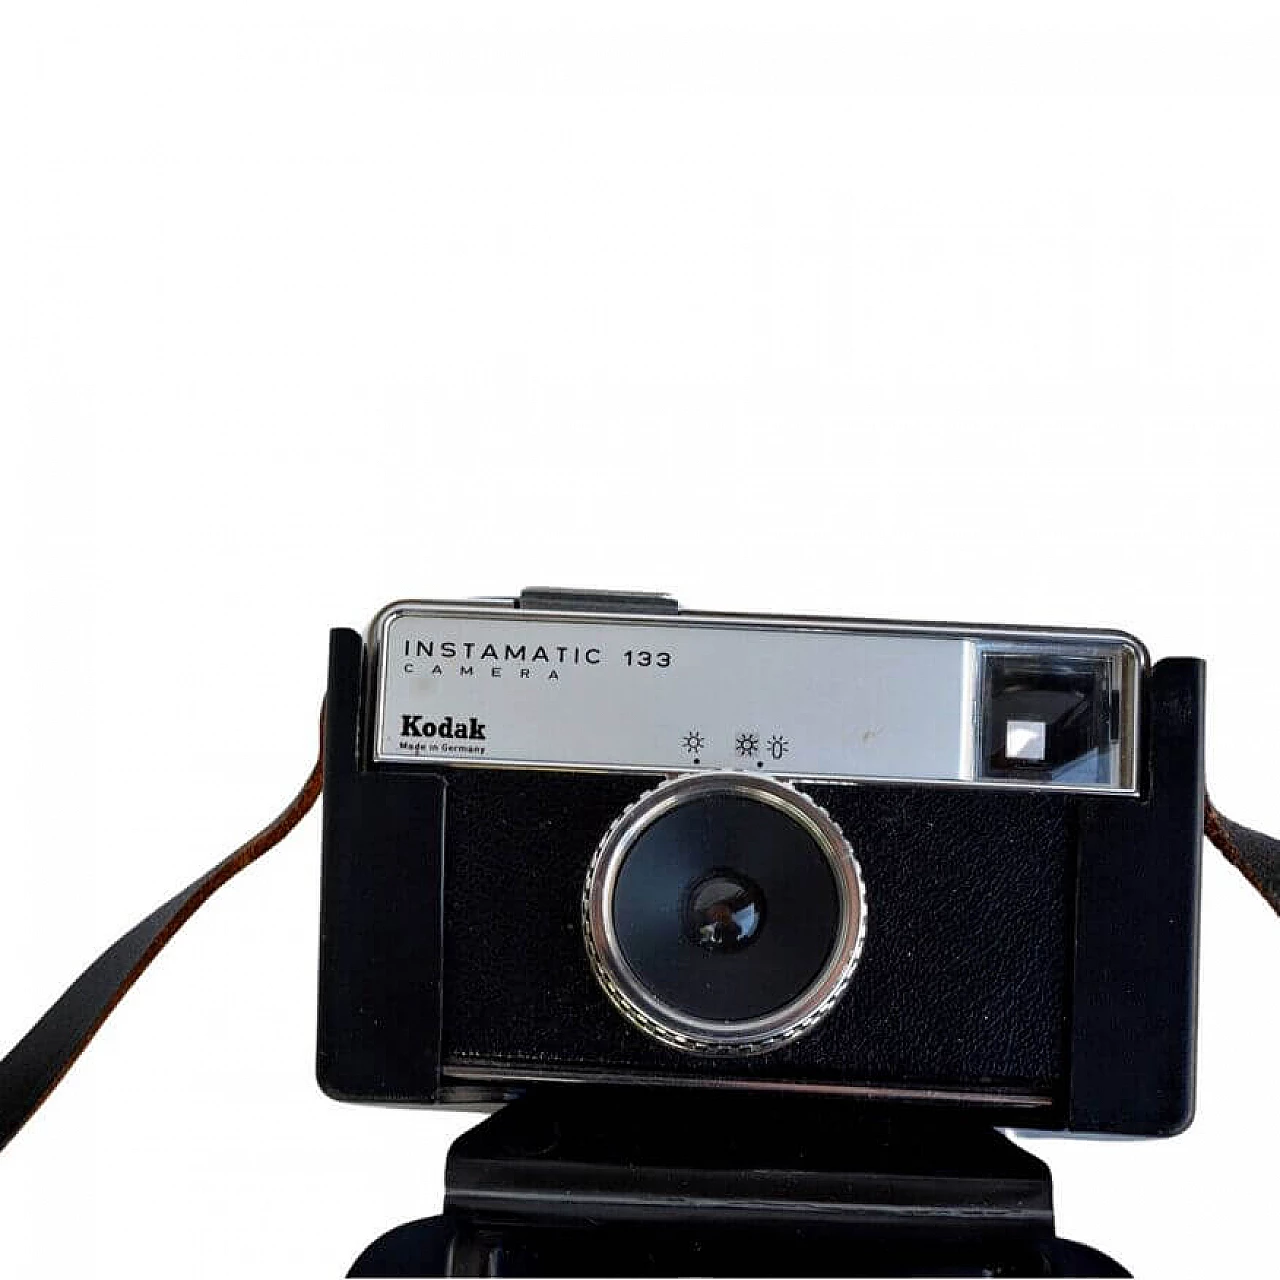 Kodak Instamatic 133 analogue camera, 1970s 2